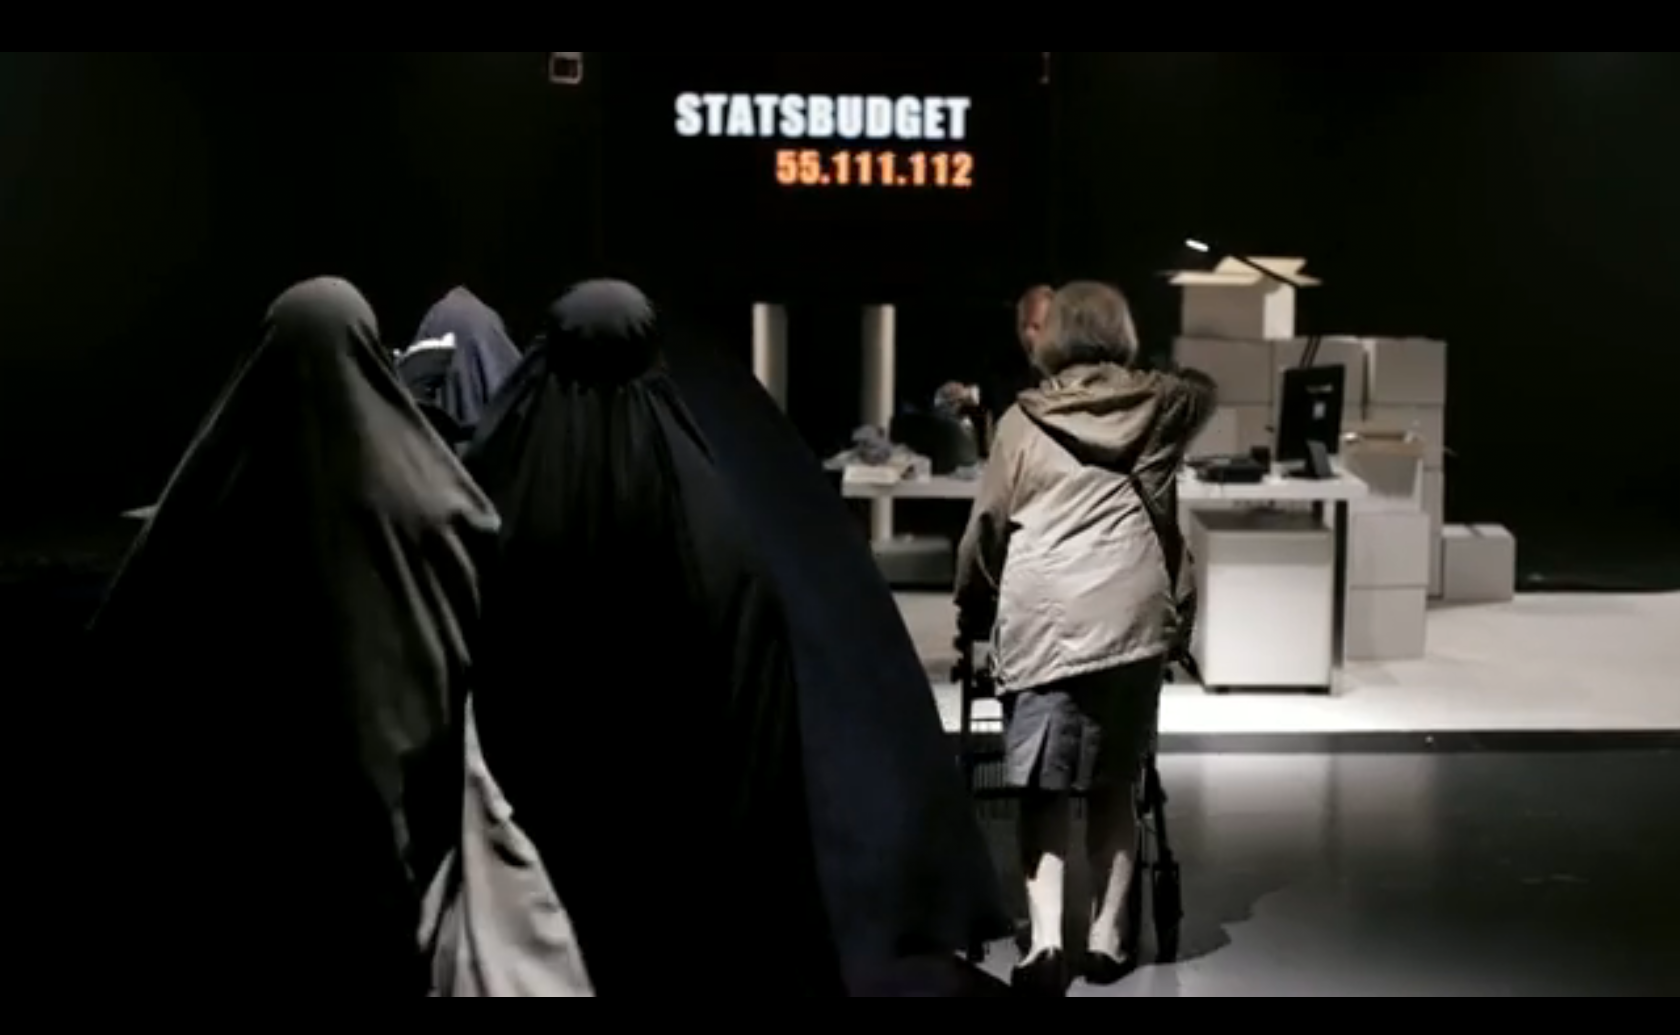 reklamfilm, Riksdagsvalet 2010, Sverigedemokraterna, Reklam